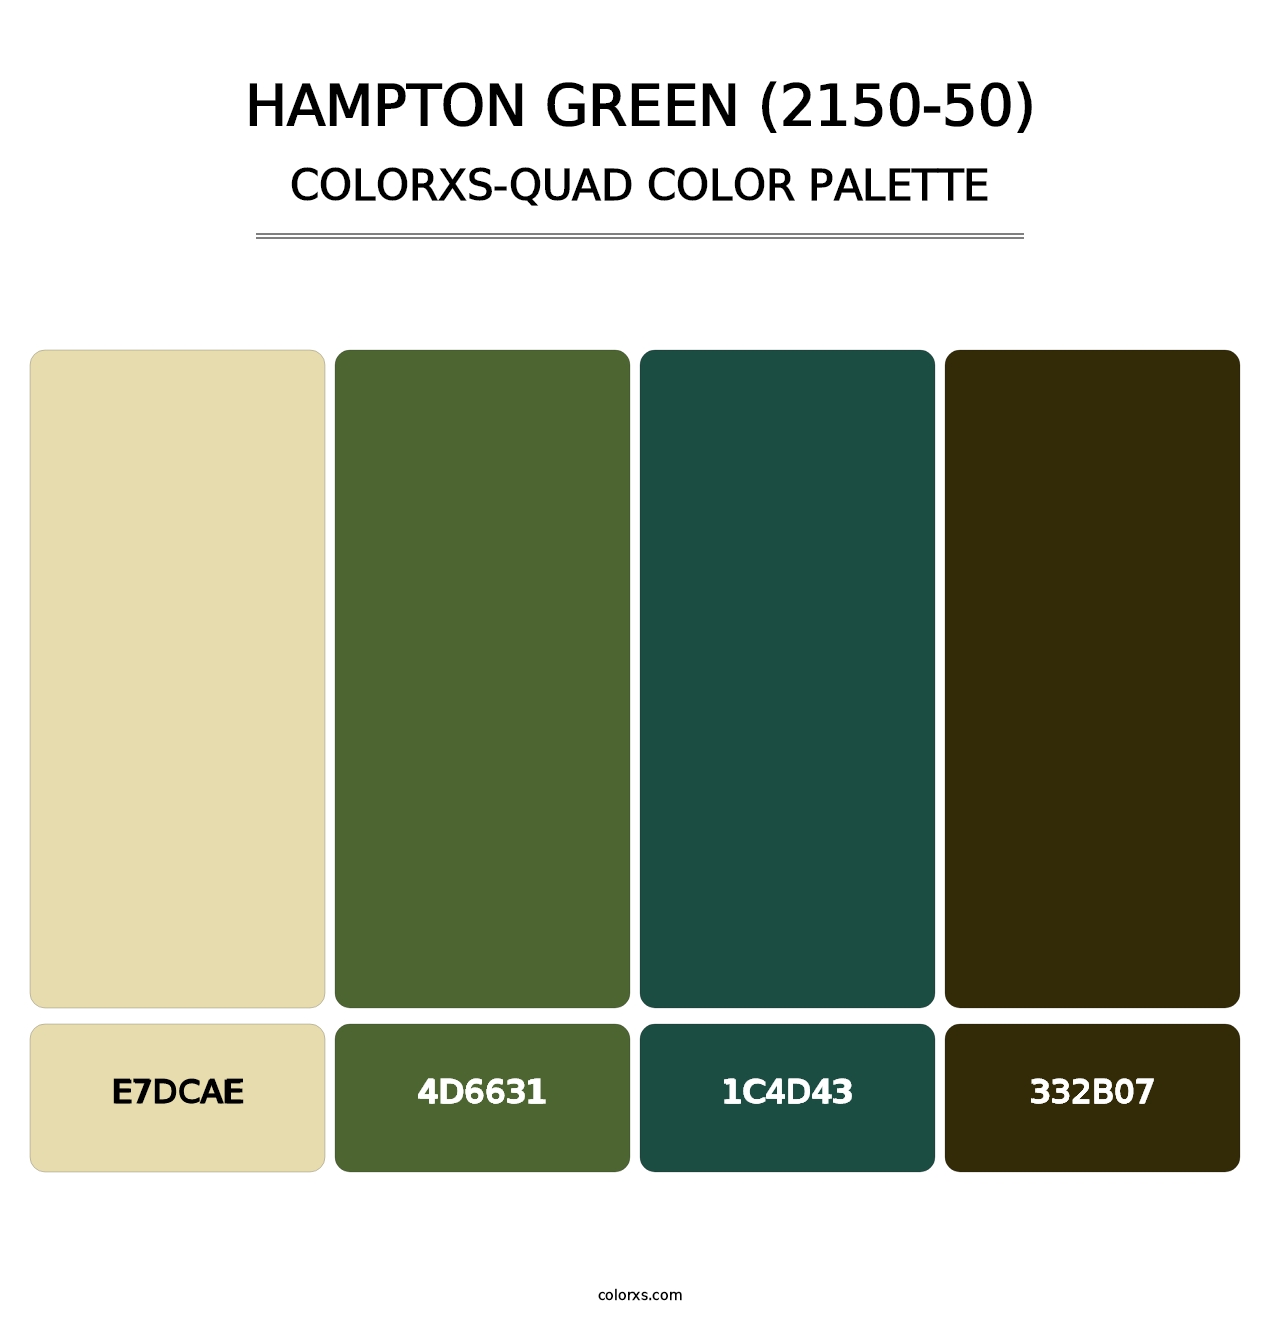 Hampton Green (2150-50) - Colorxs Quad Palette